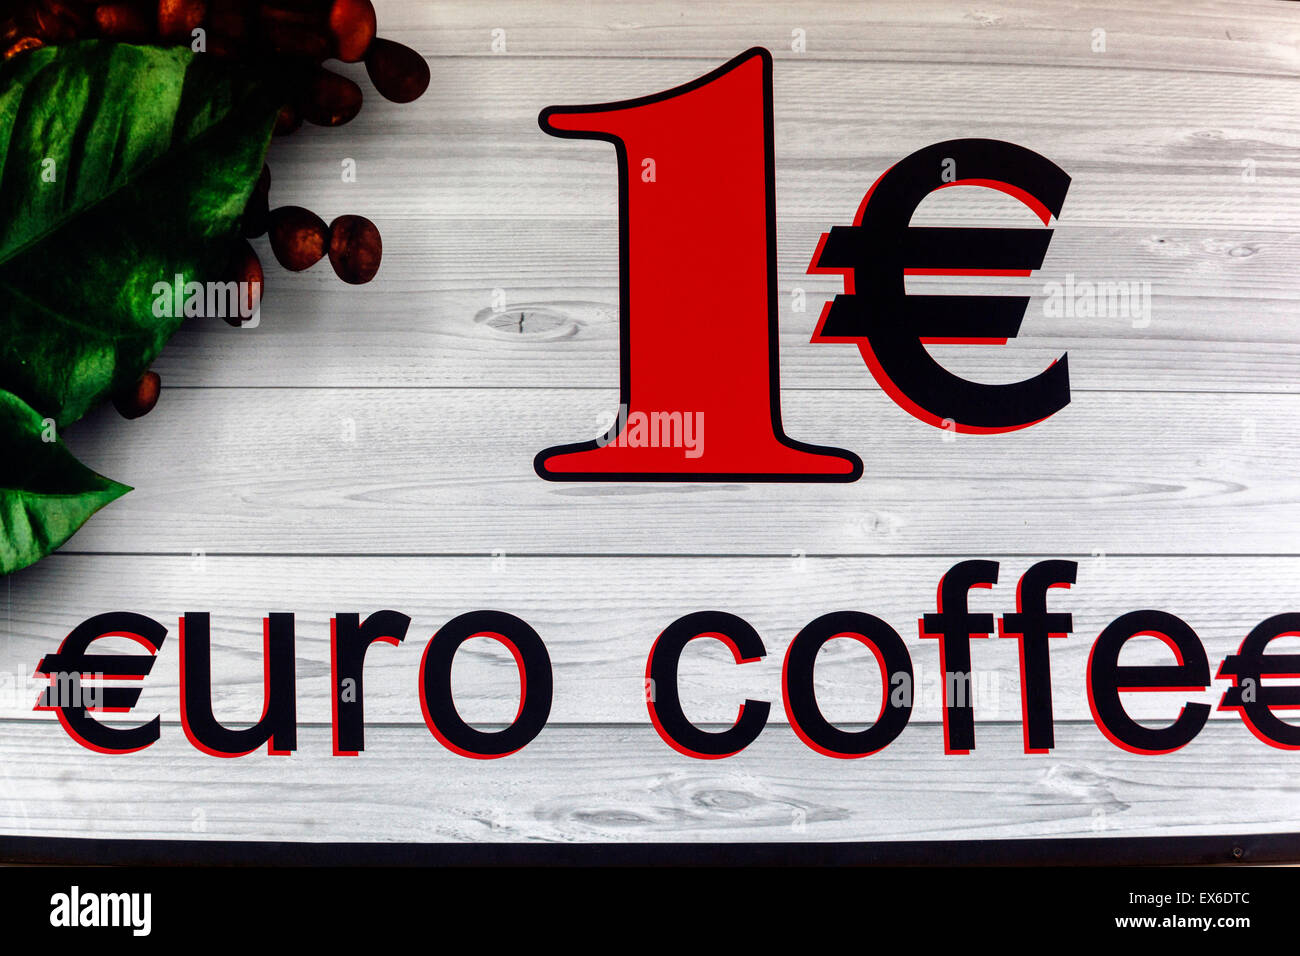 https://c8.alamy.com/comp/EX6DTC/coffee-for-one-euro-sign-ad-advert-EX6DTC.jpg